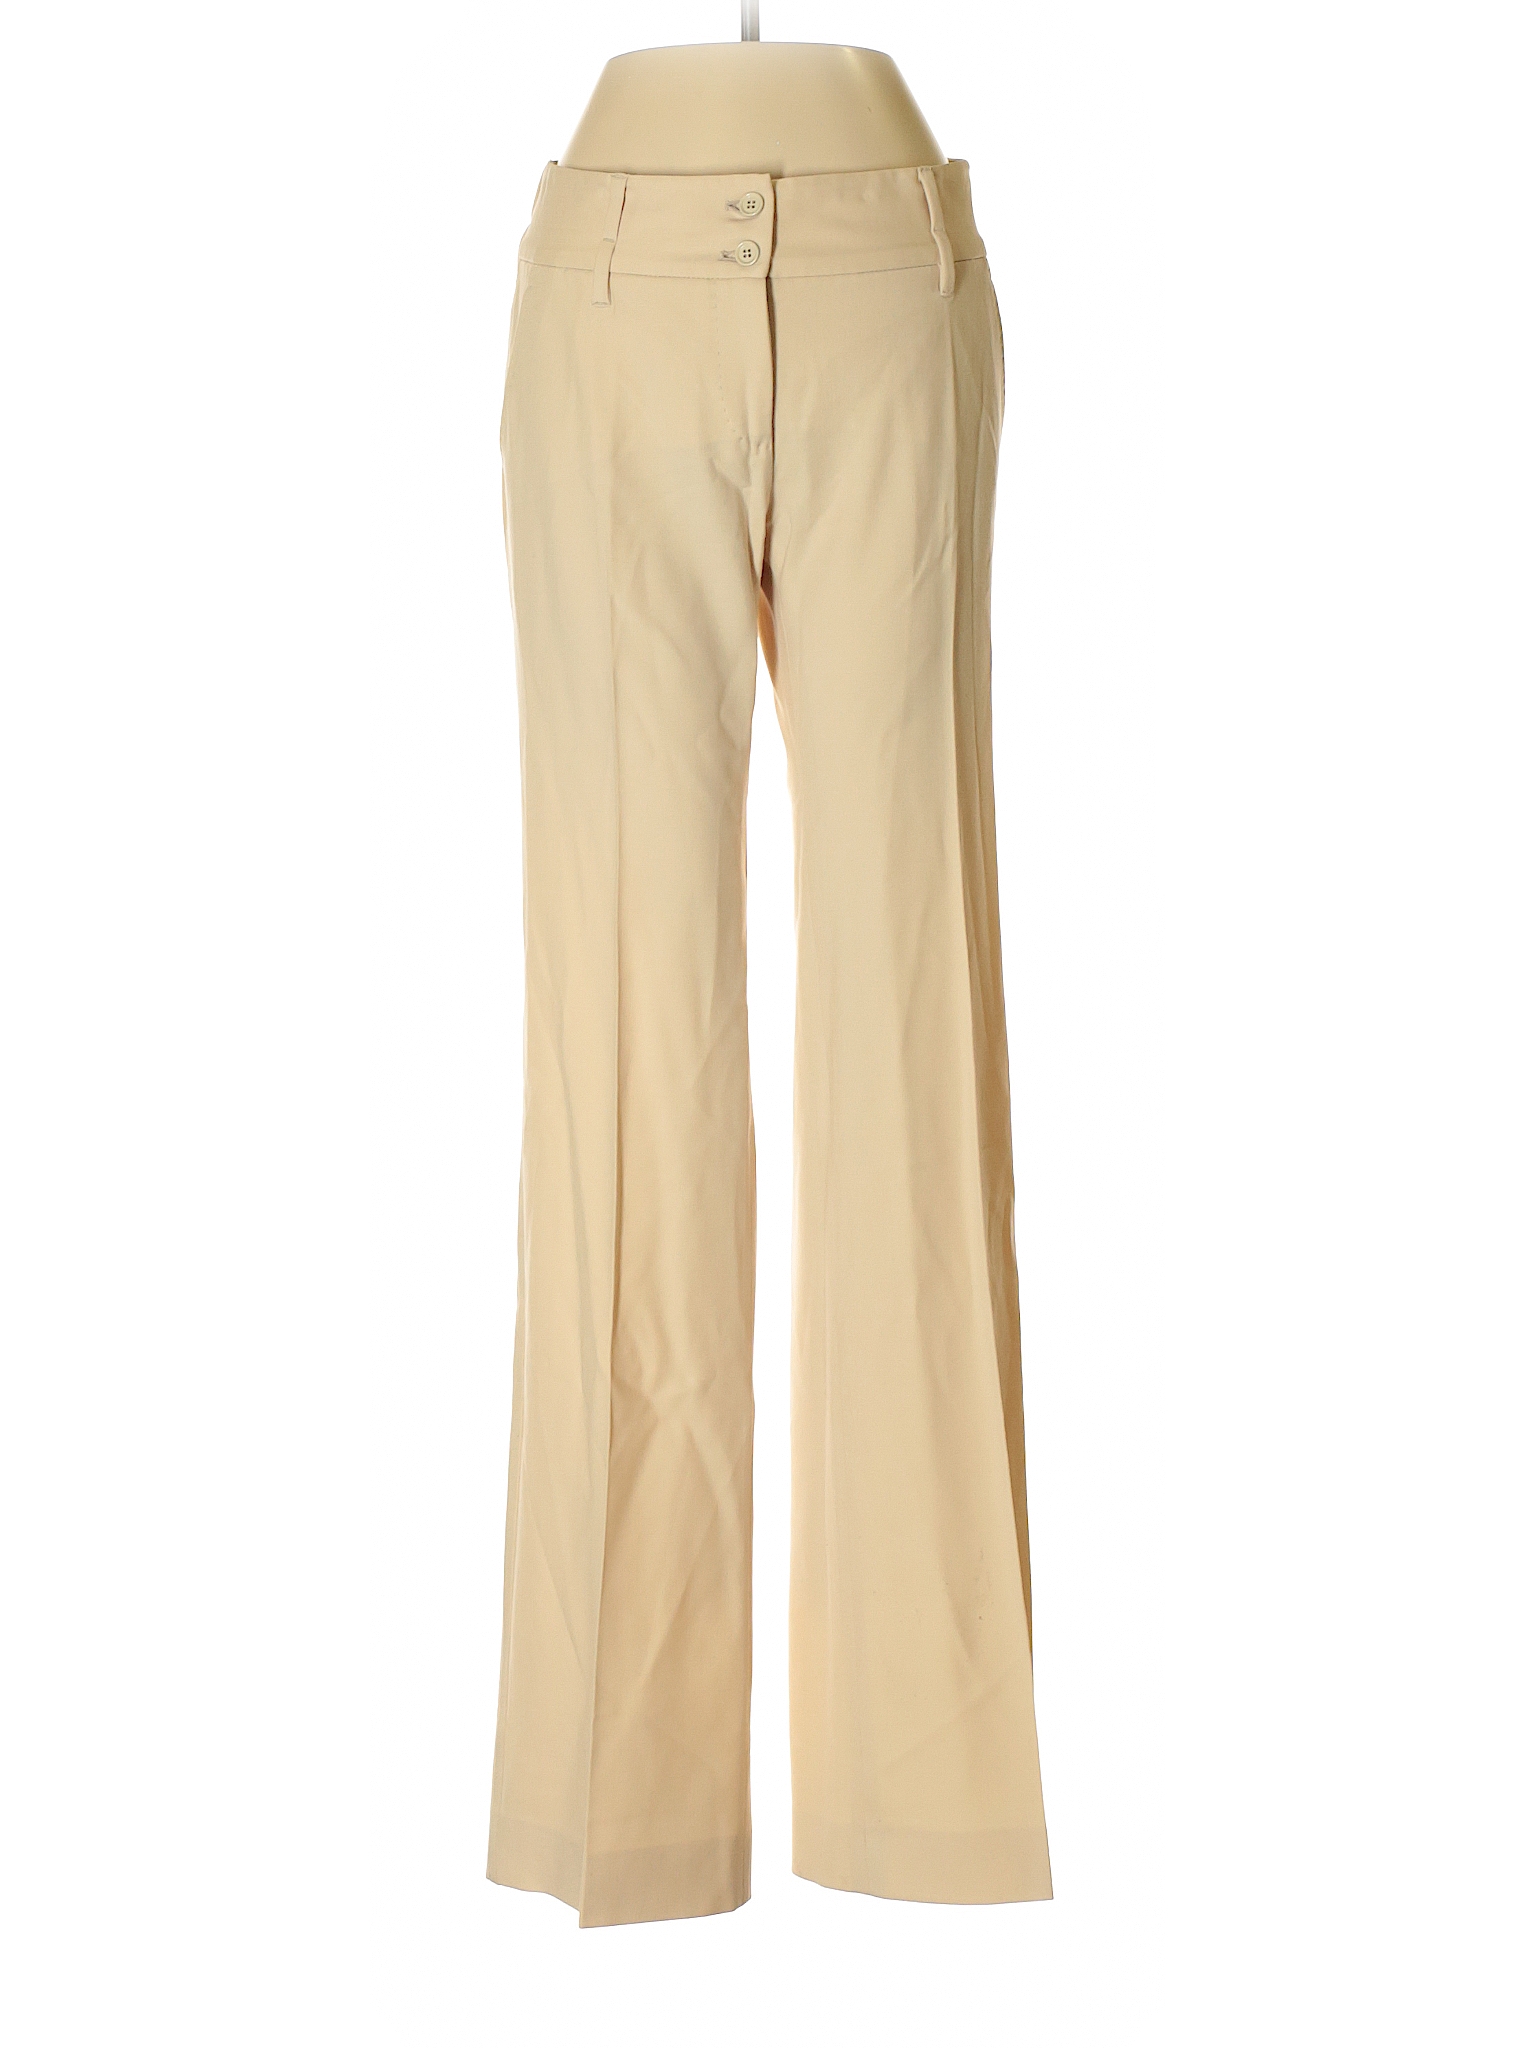 Dolce & Gabbana Solid Beige Dress Pants Size 38 (IT) - 81% off | thredUP